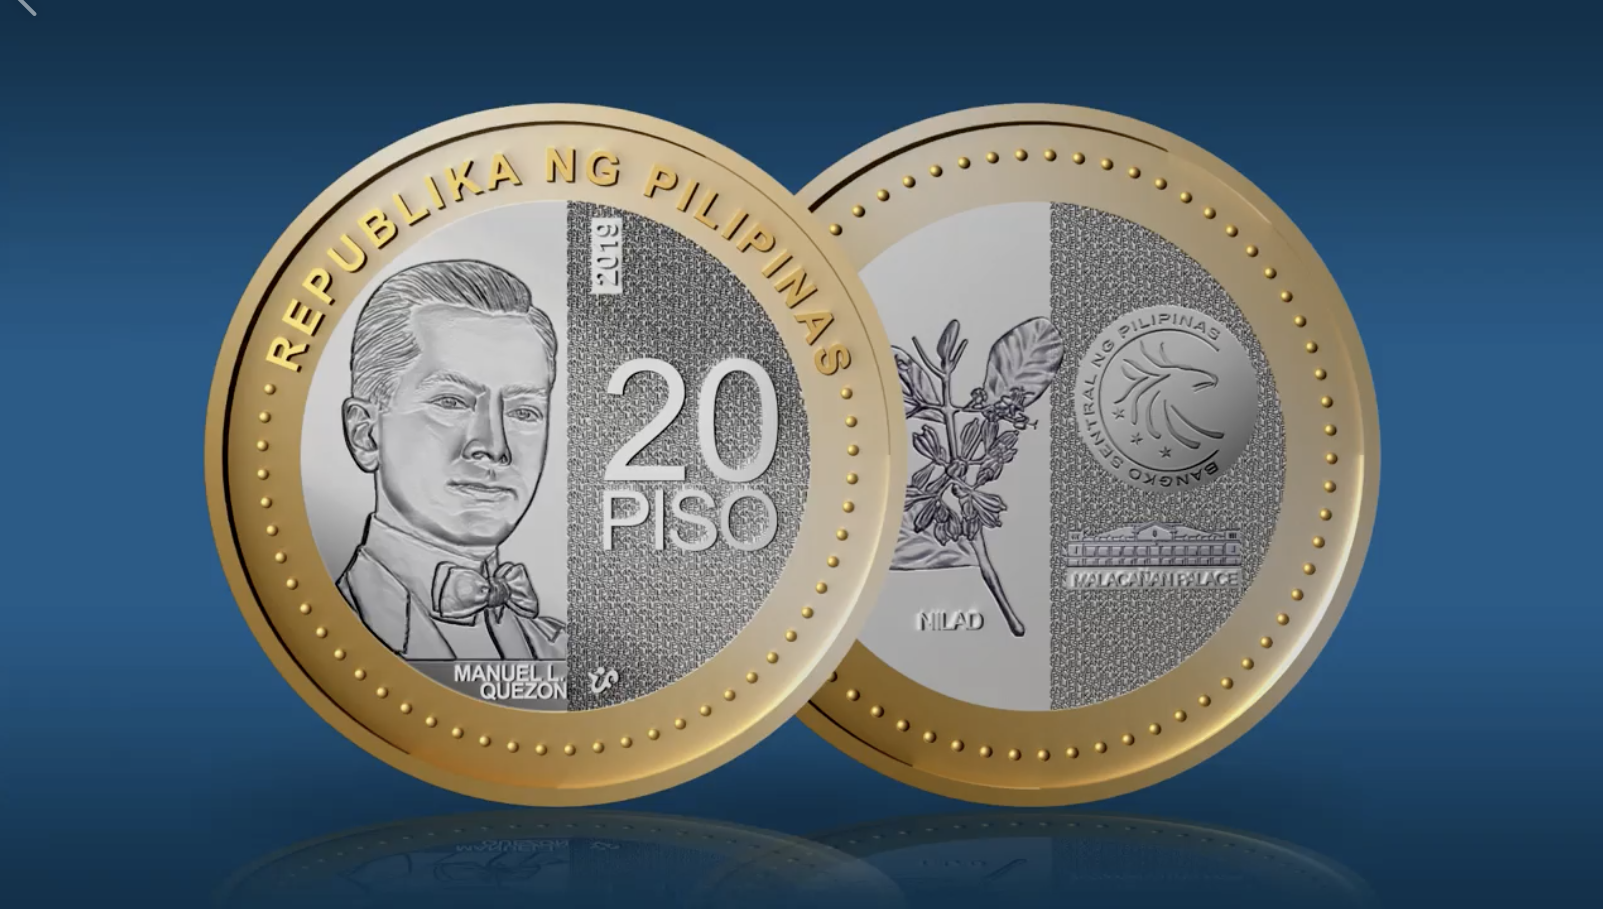 New ₱20 coin finalist in international 'Best New Coins' award